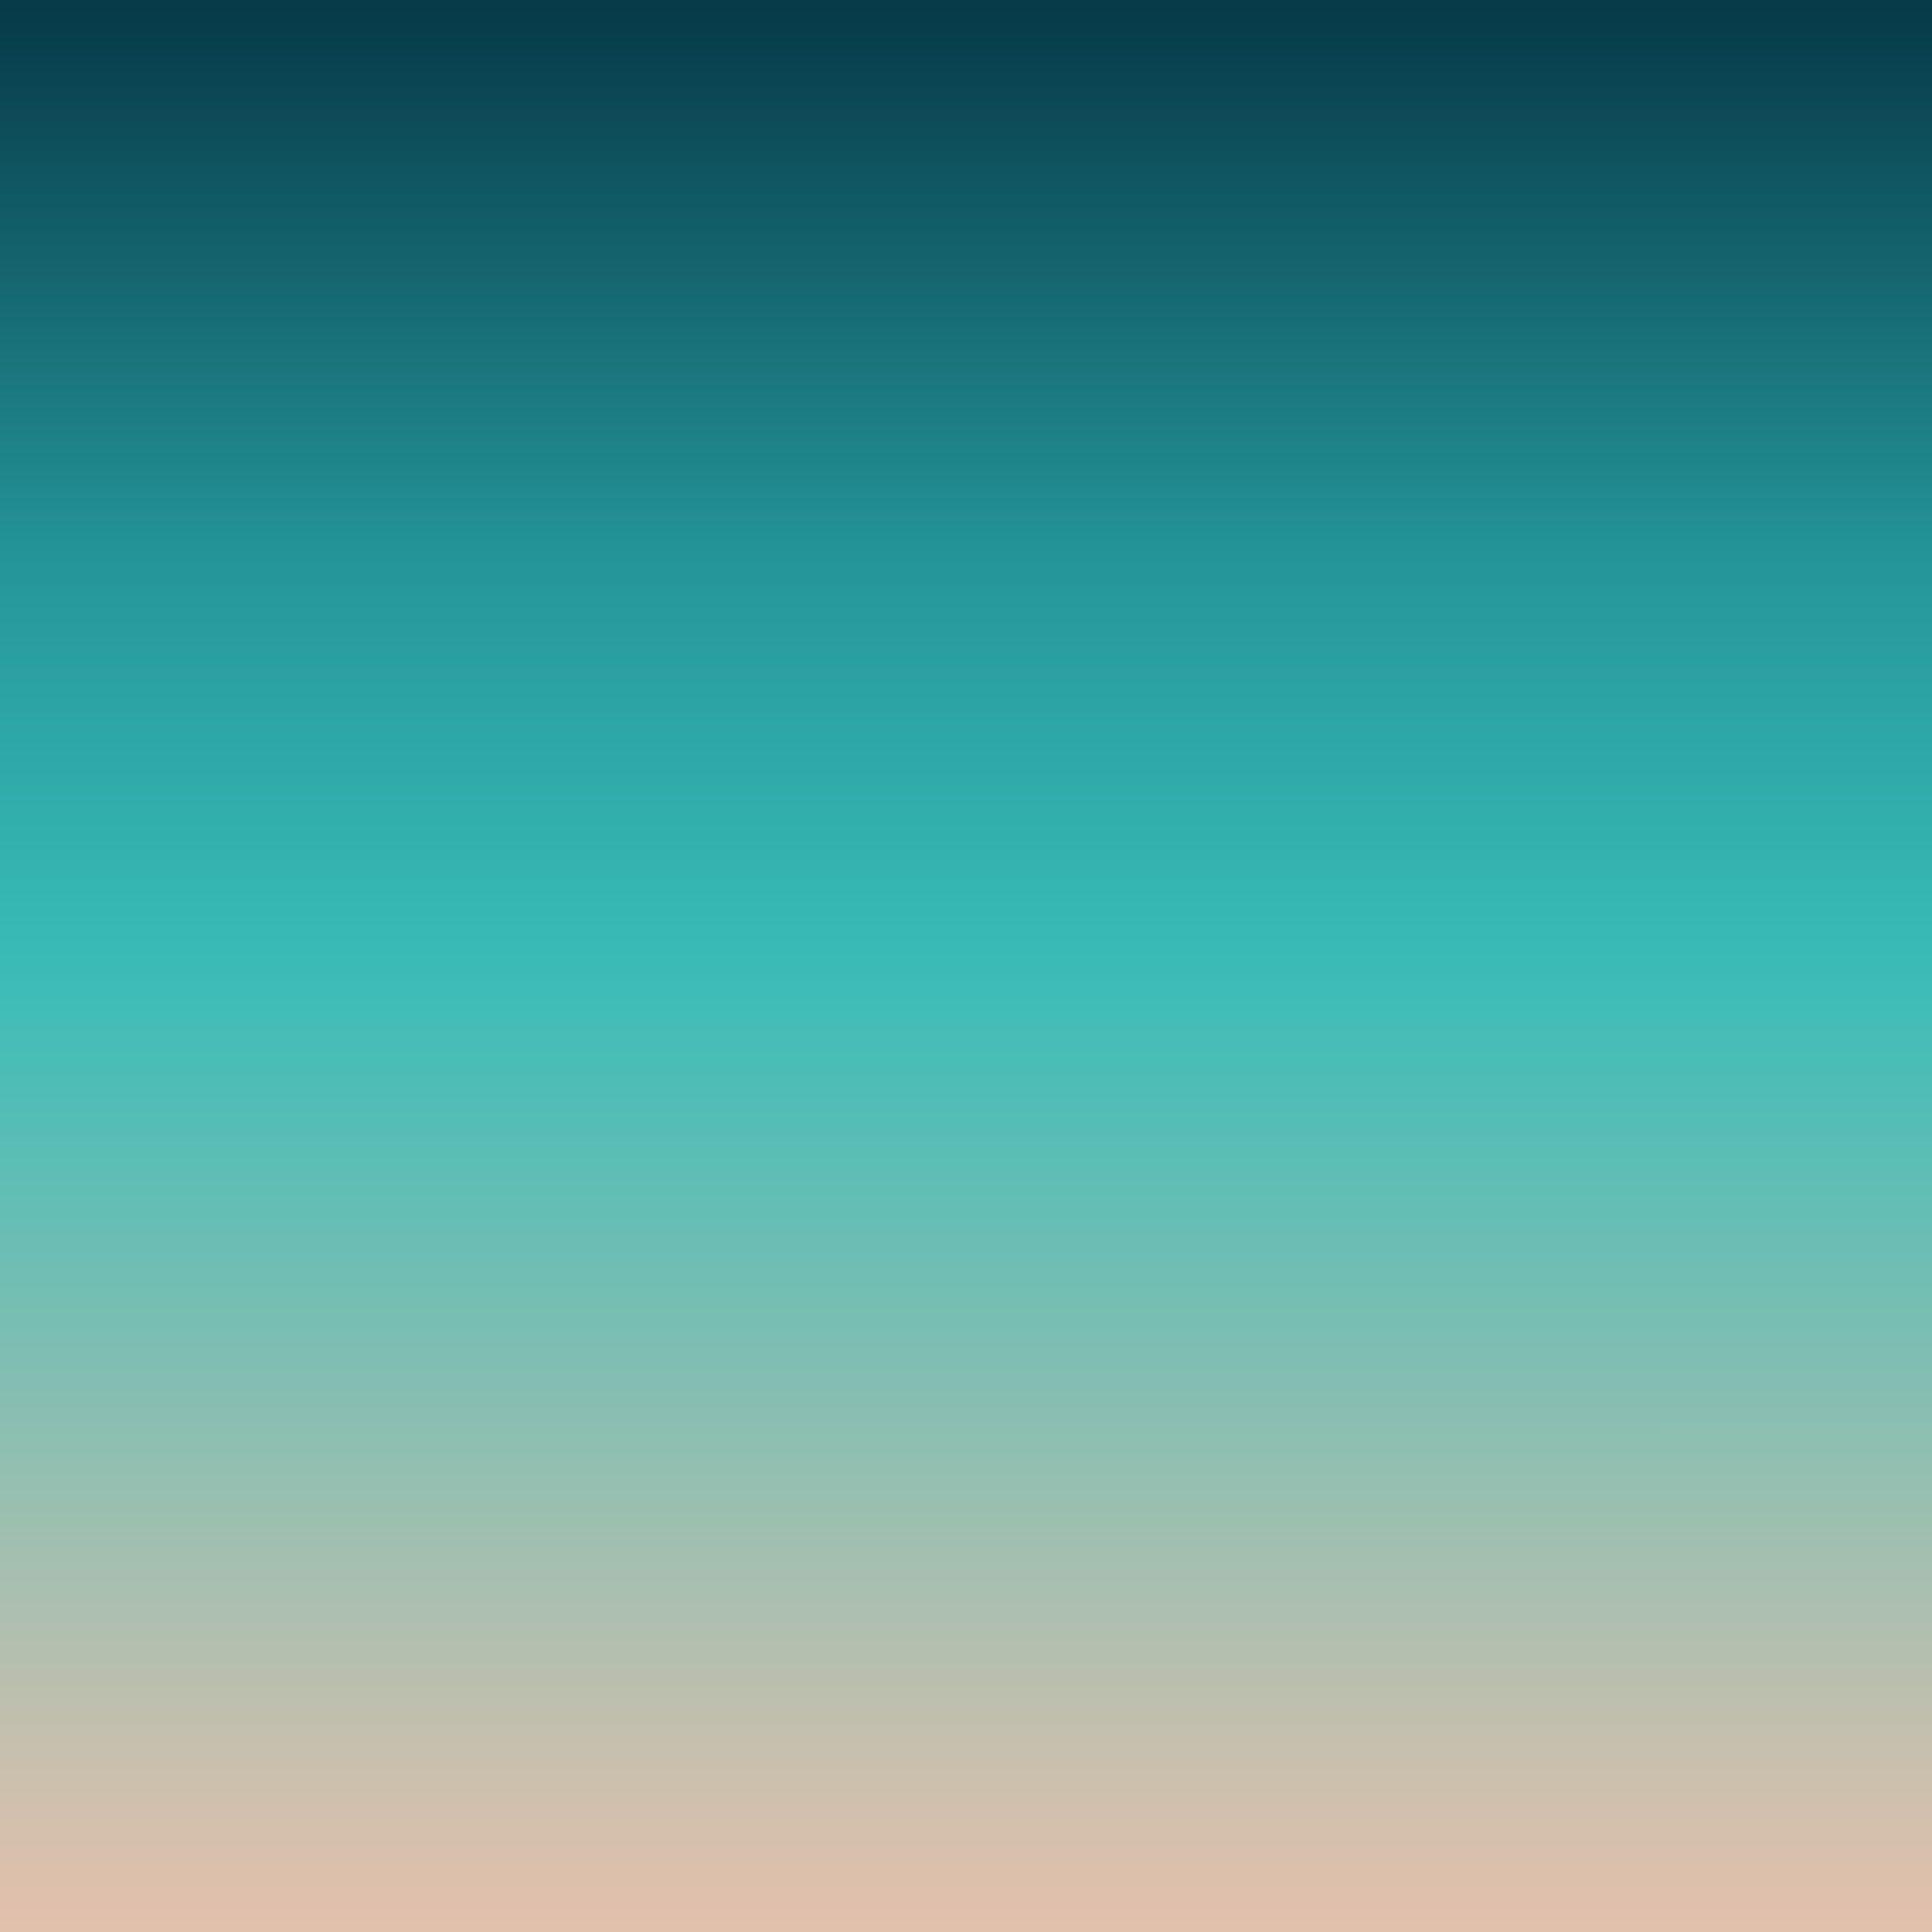 Iphone8 Ios11 Blue Background Apple Blur Gradation Wallpaper